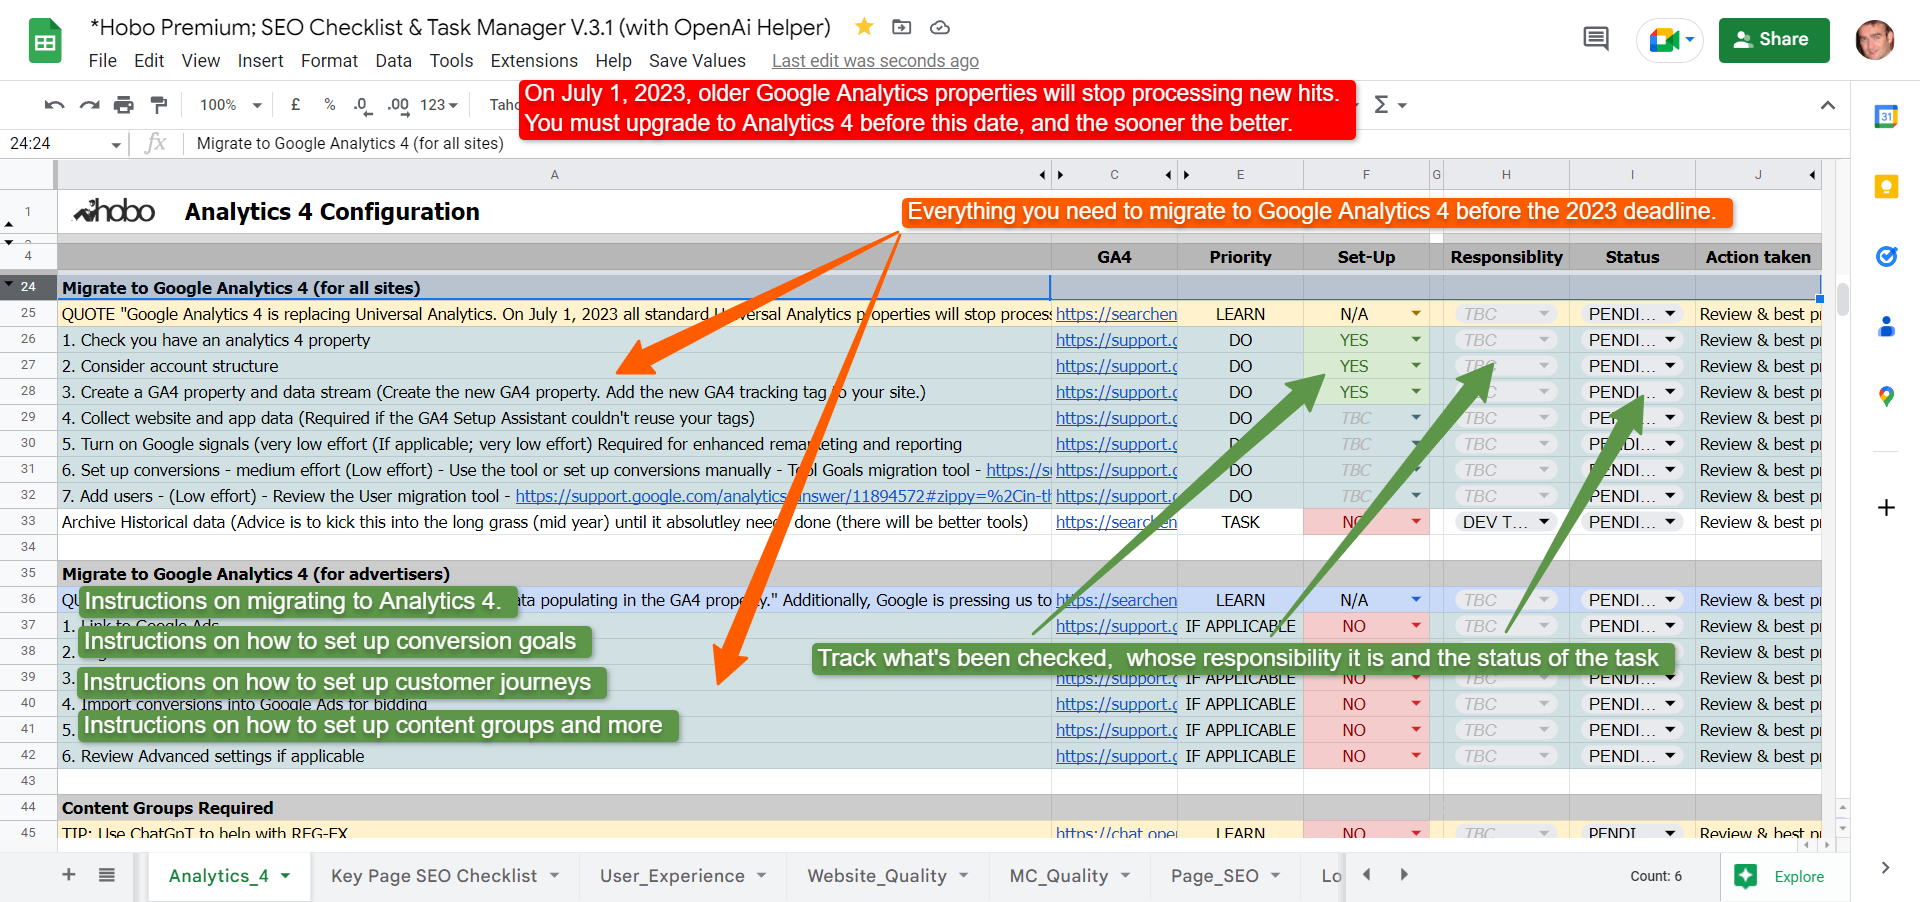 Analytics 4 migration checklist in Google sheets